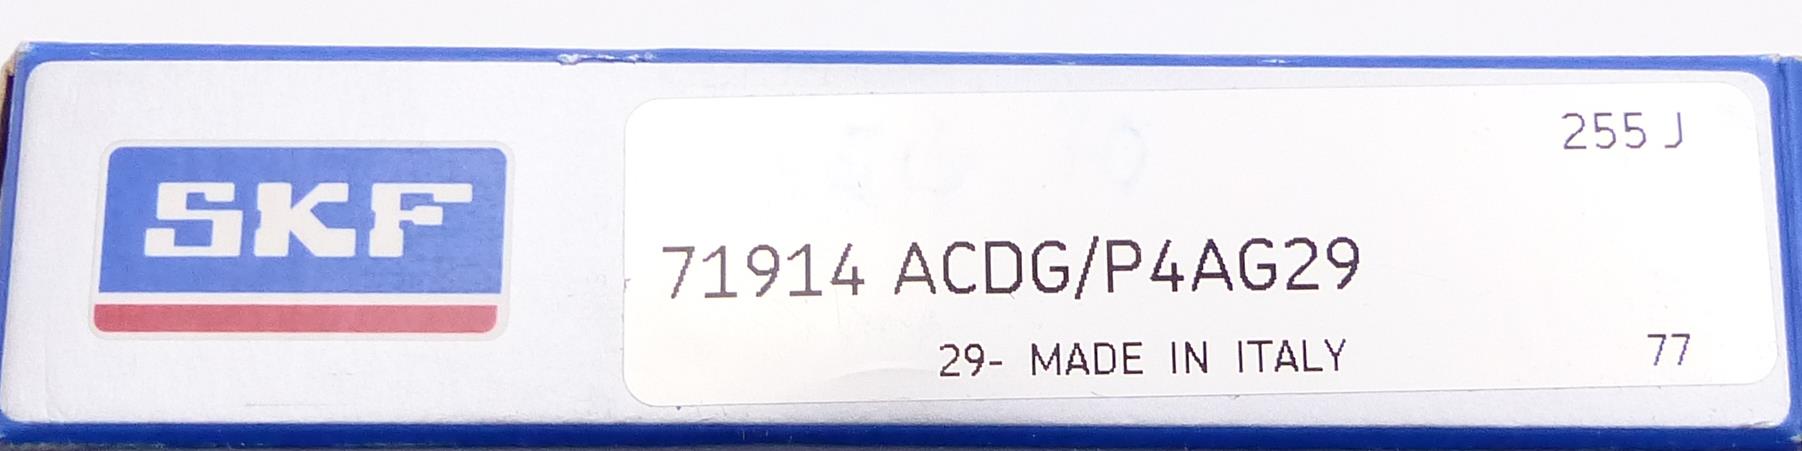 Hochpräzisionsspindellager ACDG/P4AG29 